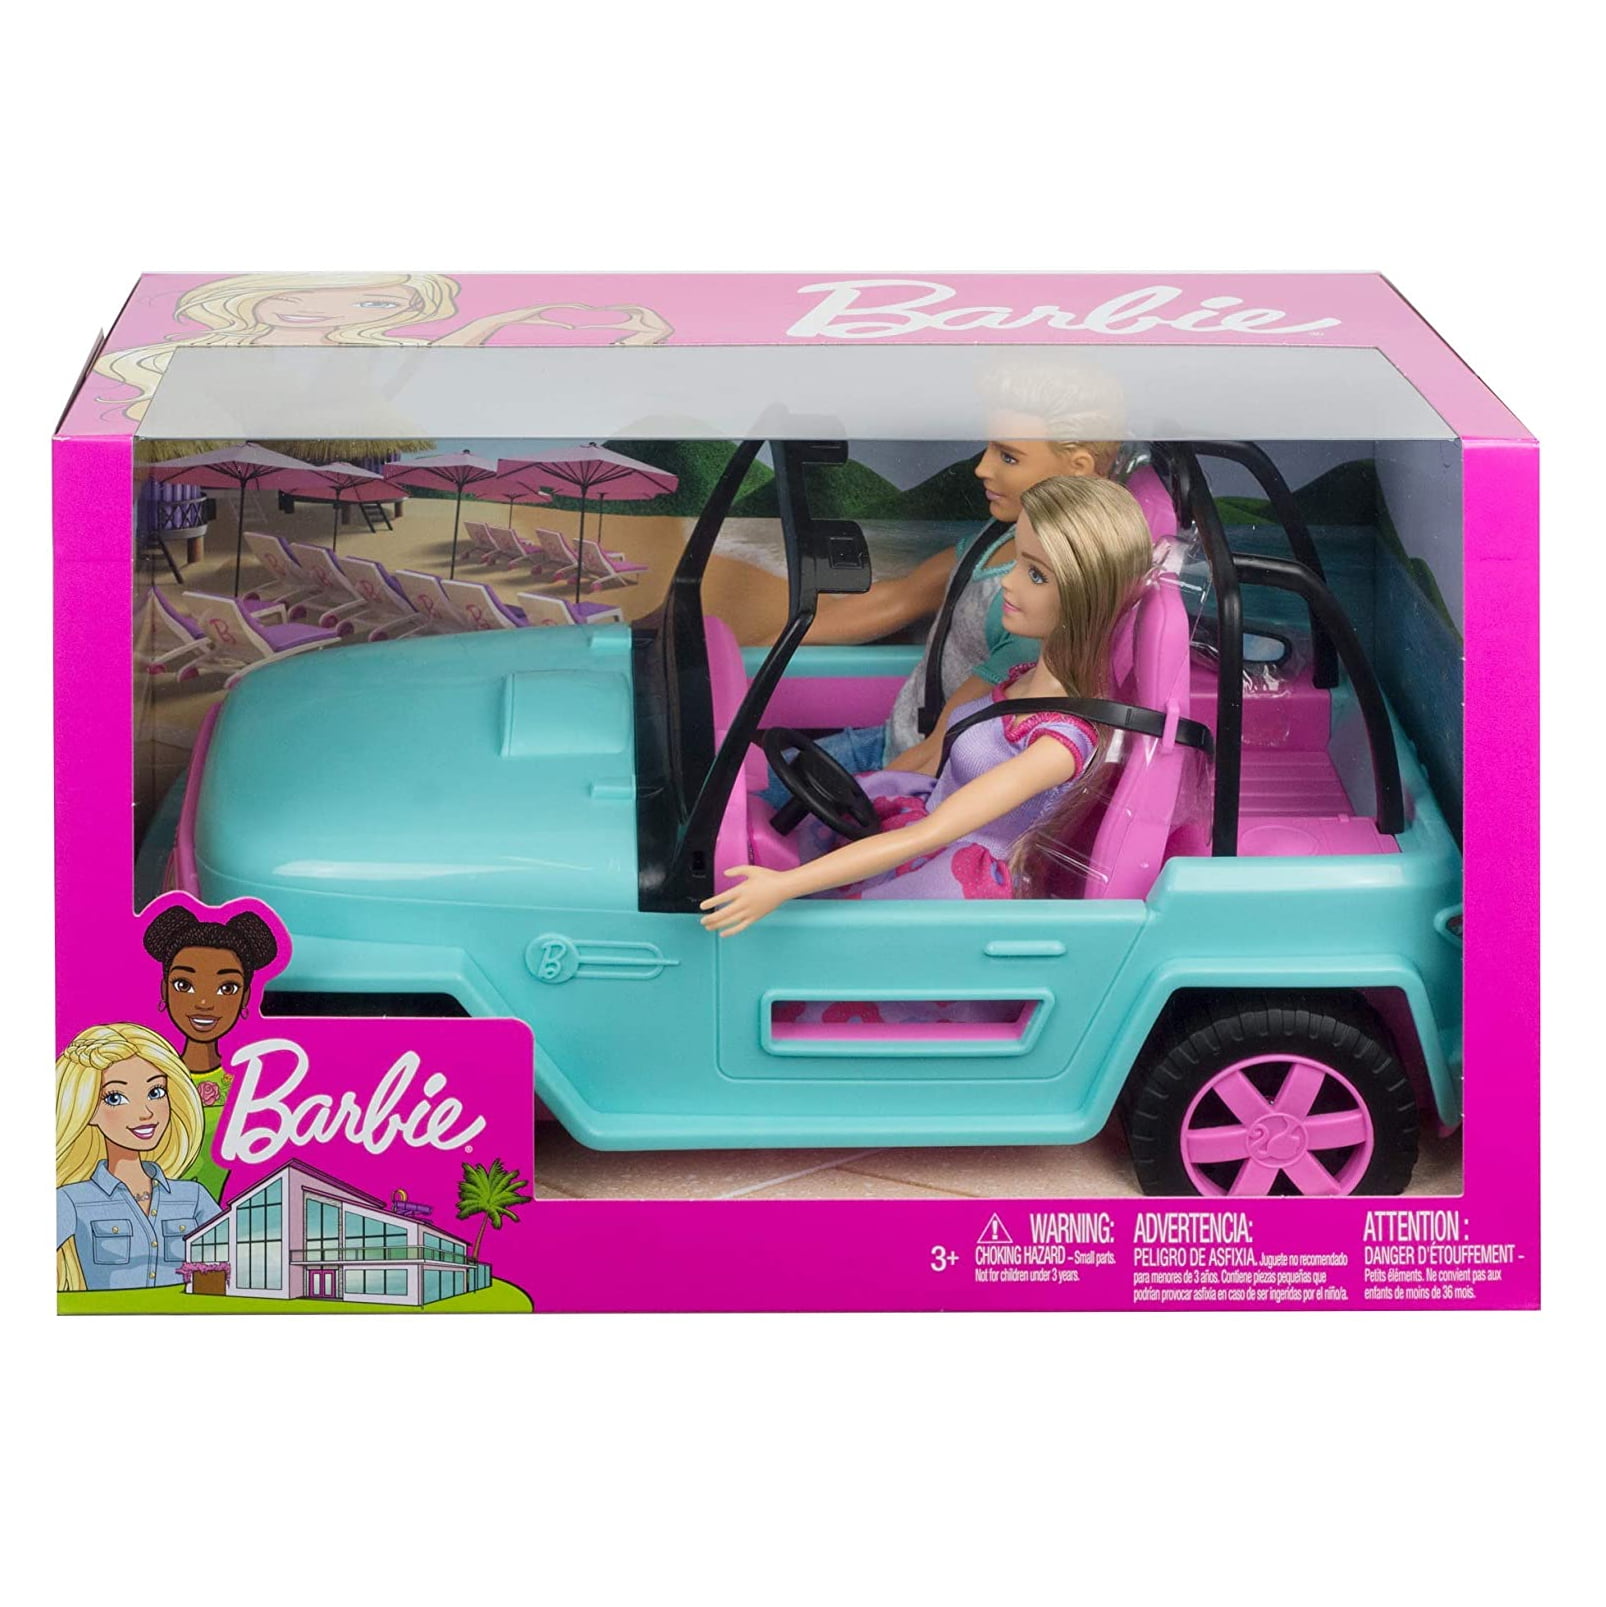 Mattel Gff58 Barbie Dolls and Vehicle Set Ages 3 Worn Box* for sale online 